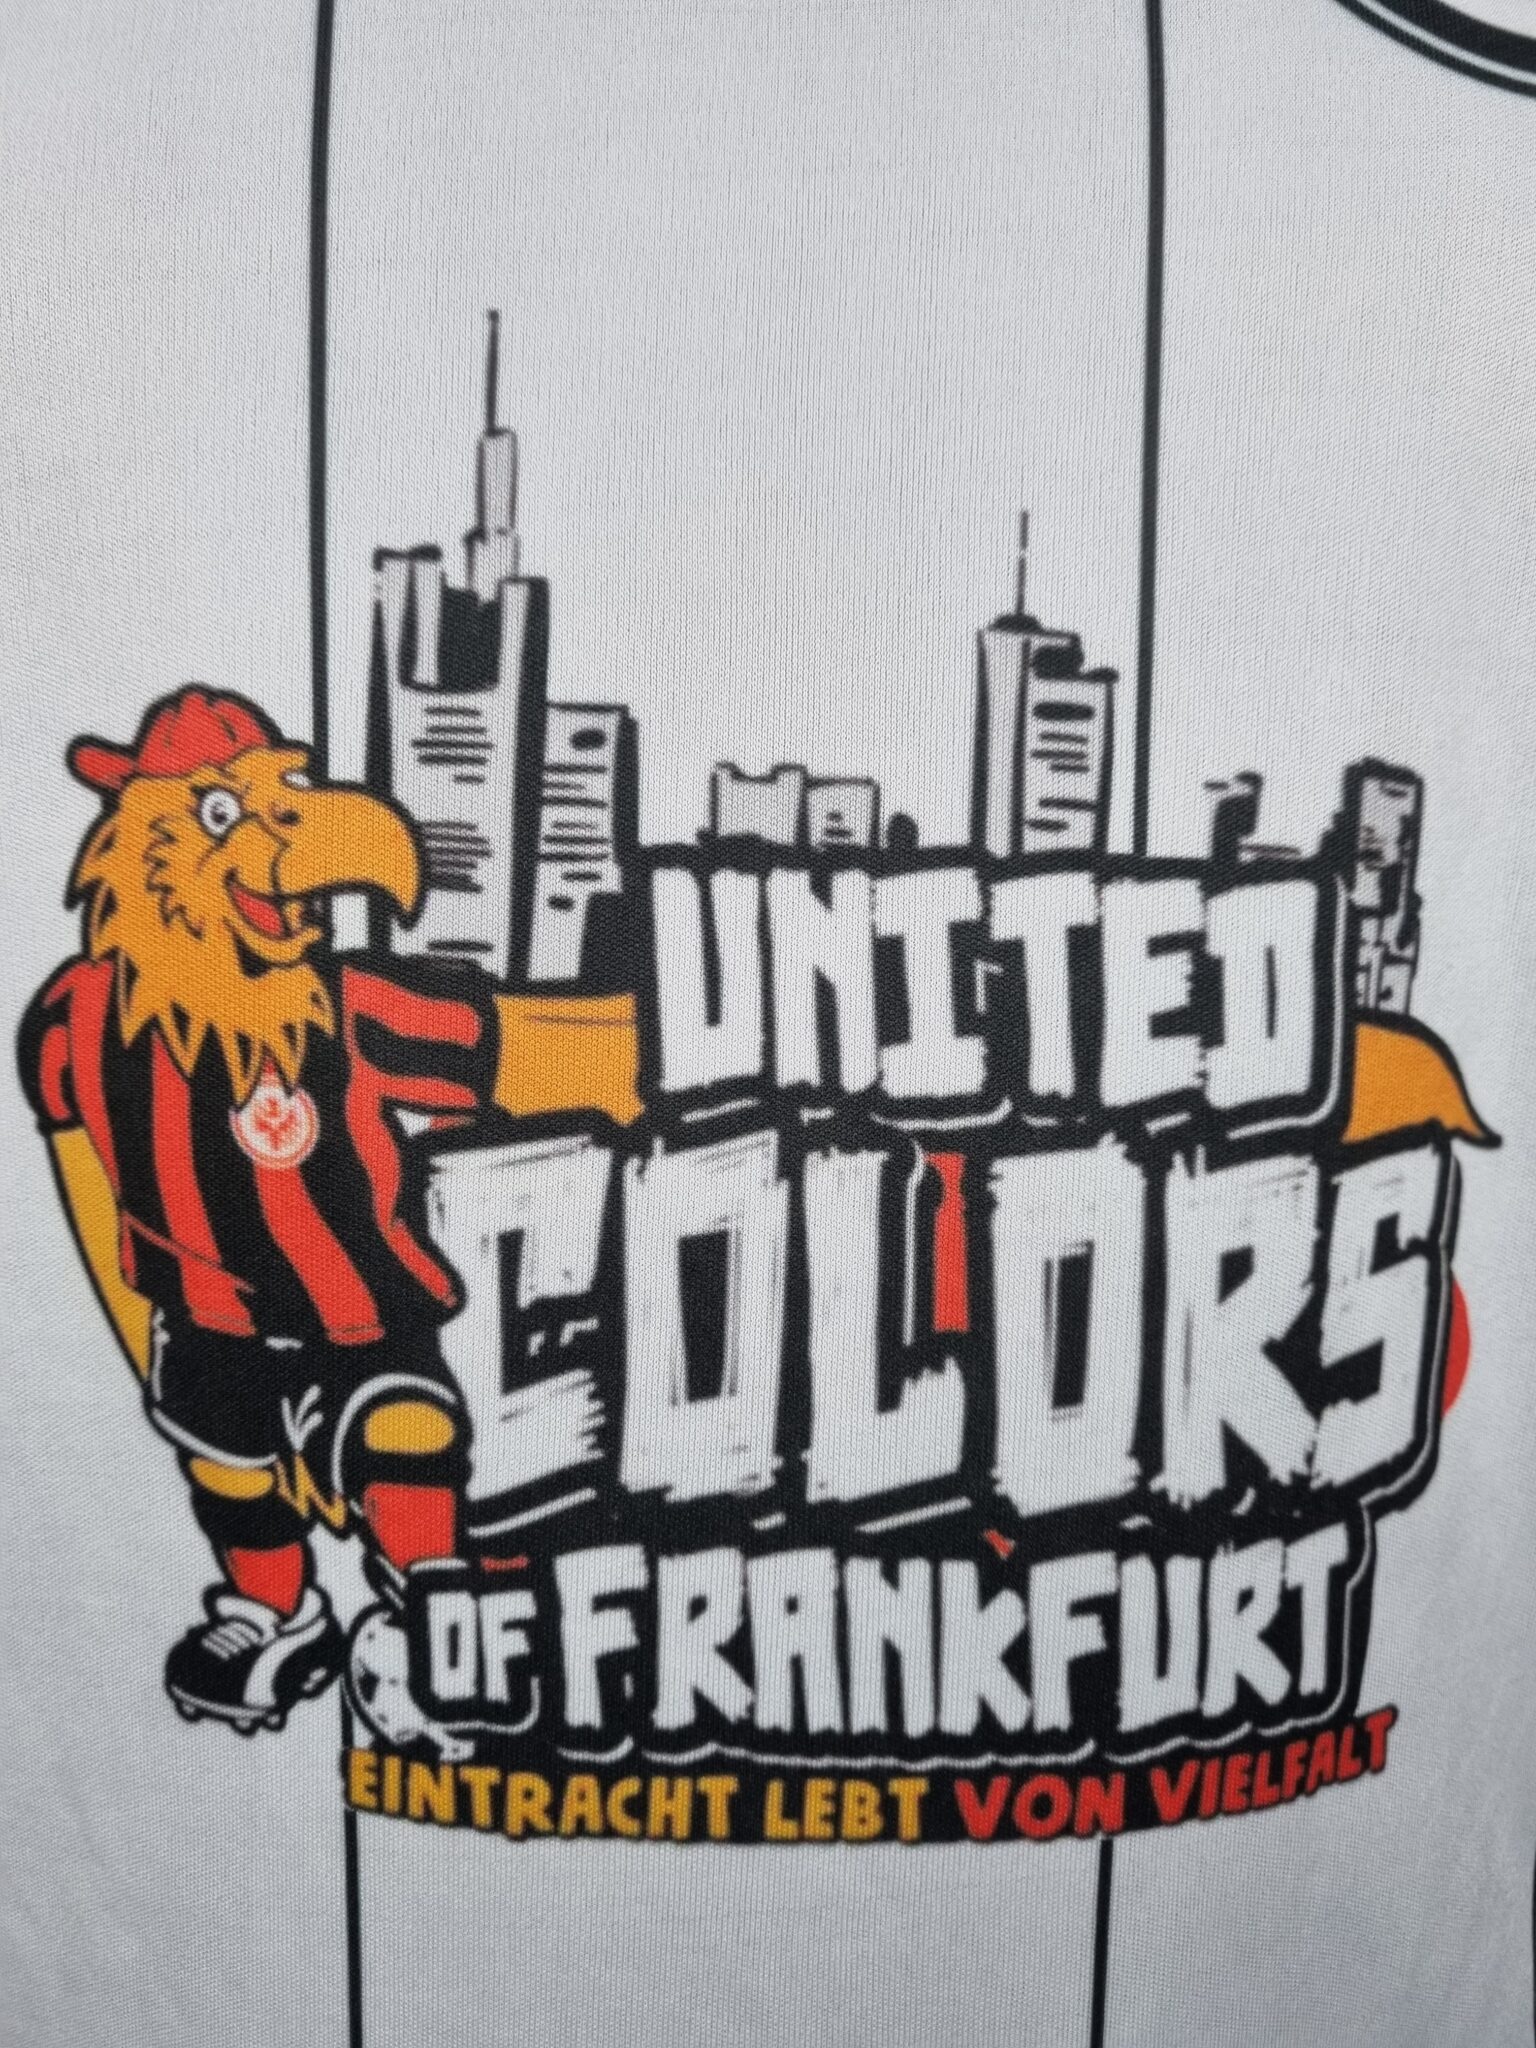 Eintracht Frankfurt "United Colors of Frankfurt" 2017/2018 Jersey Germany Shirt Special Trikot - Sport Club Memories